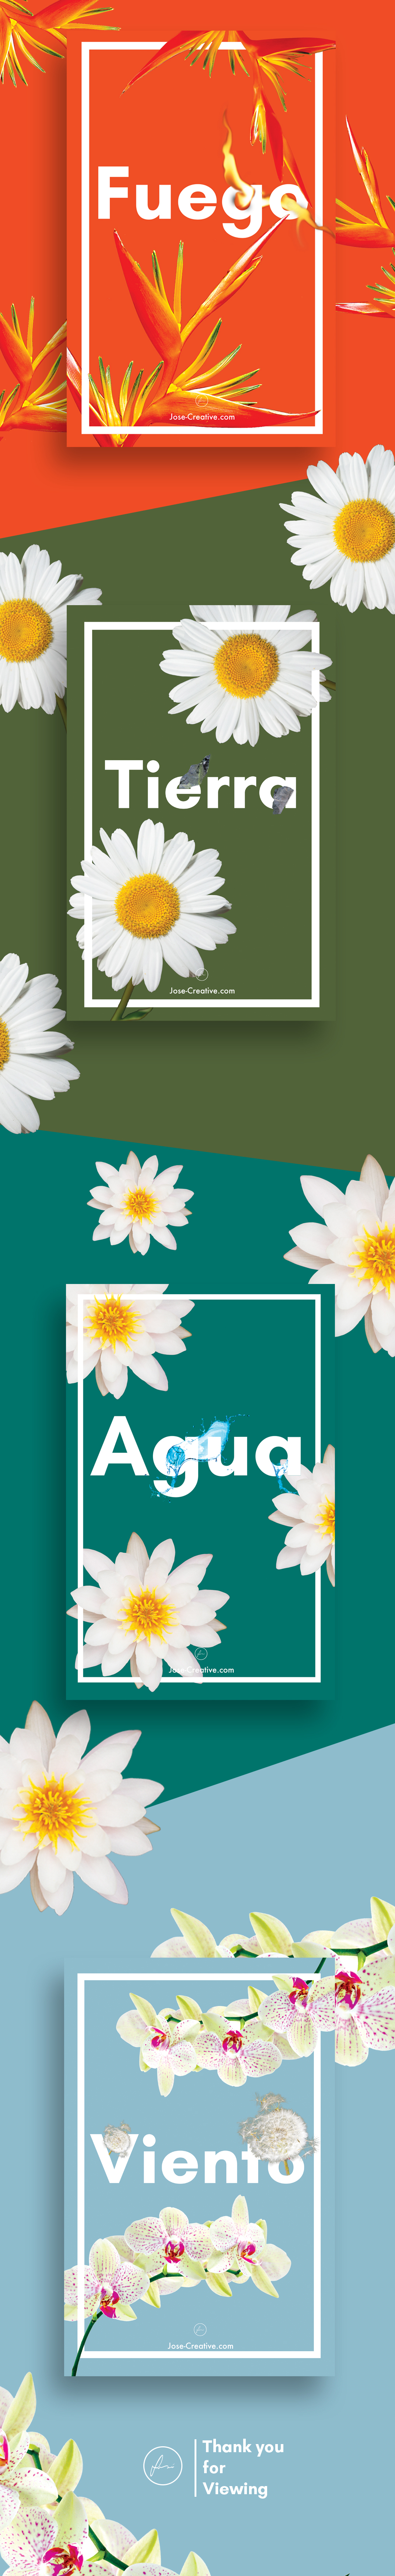 poster spanish elementos elements art design colors flower